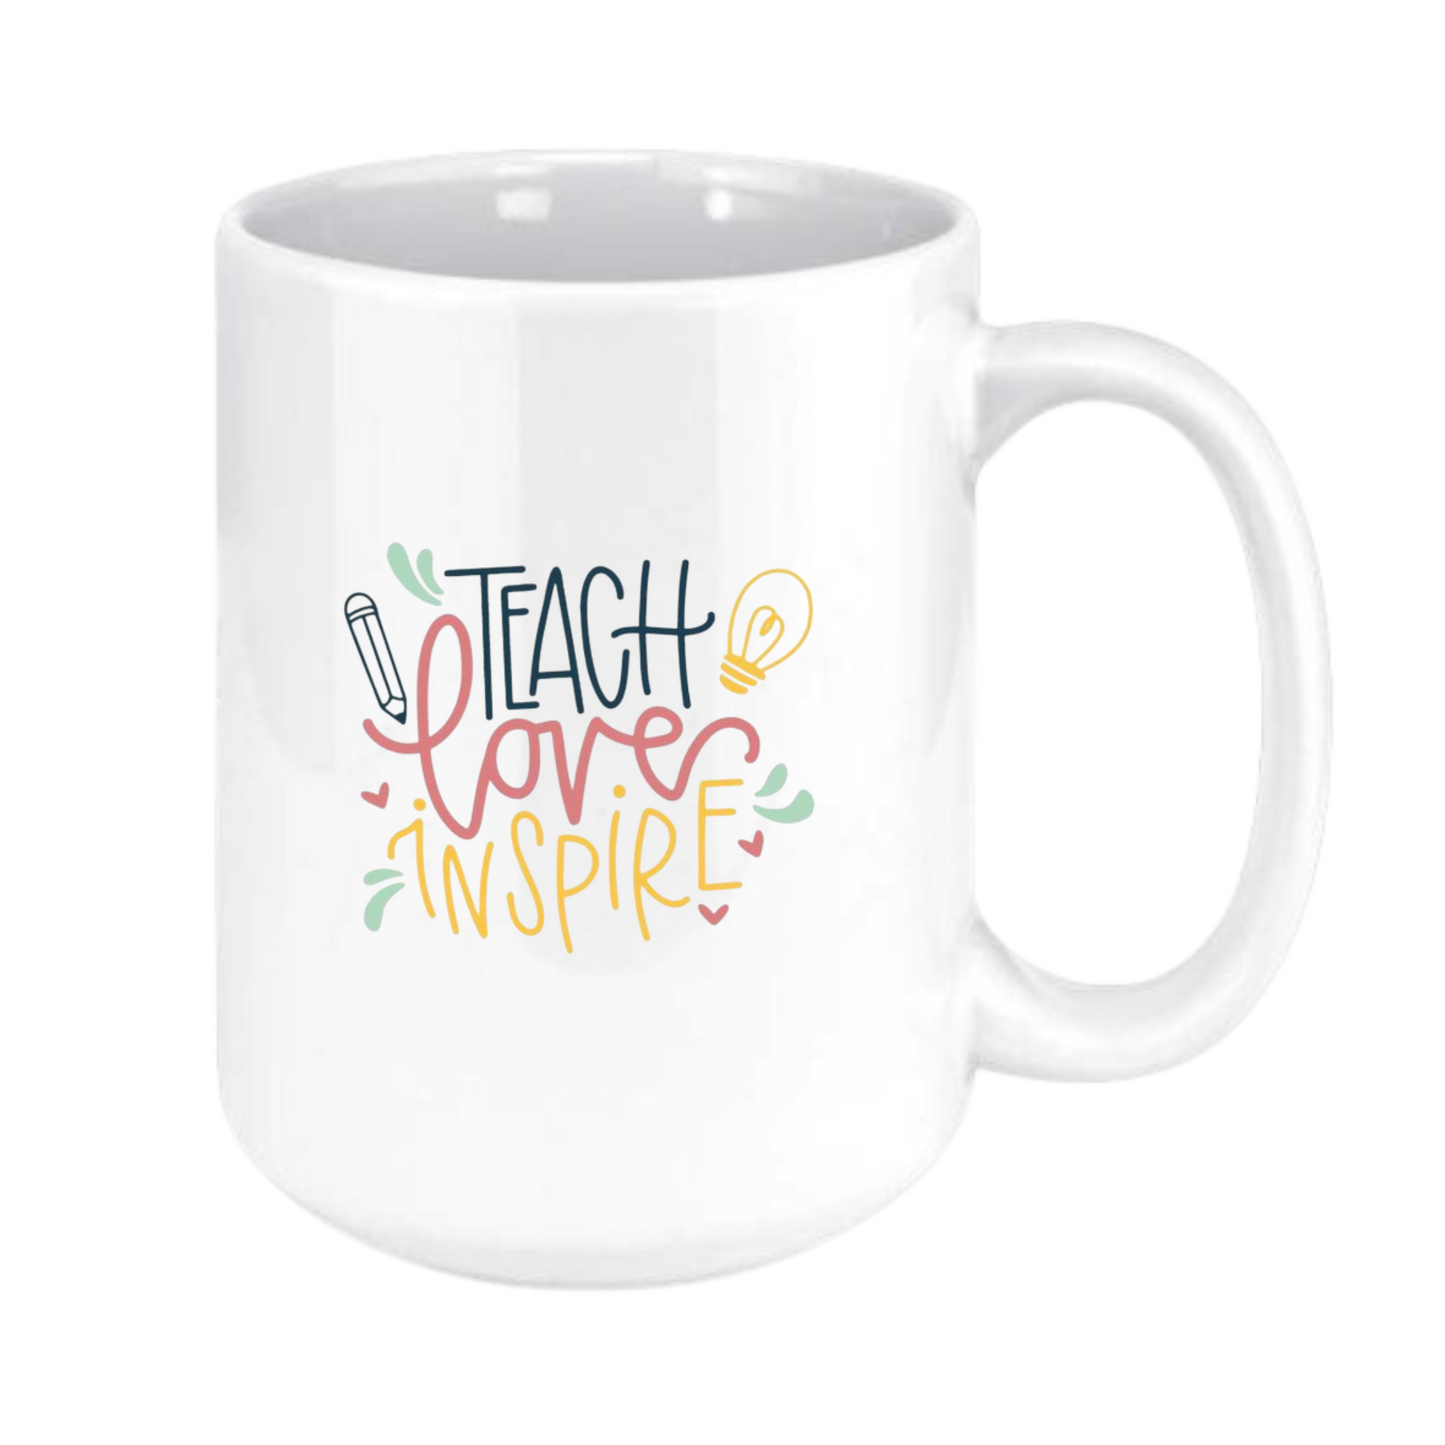 Teach love inspire mug